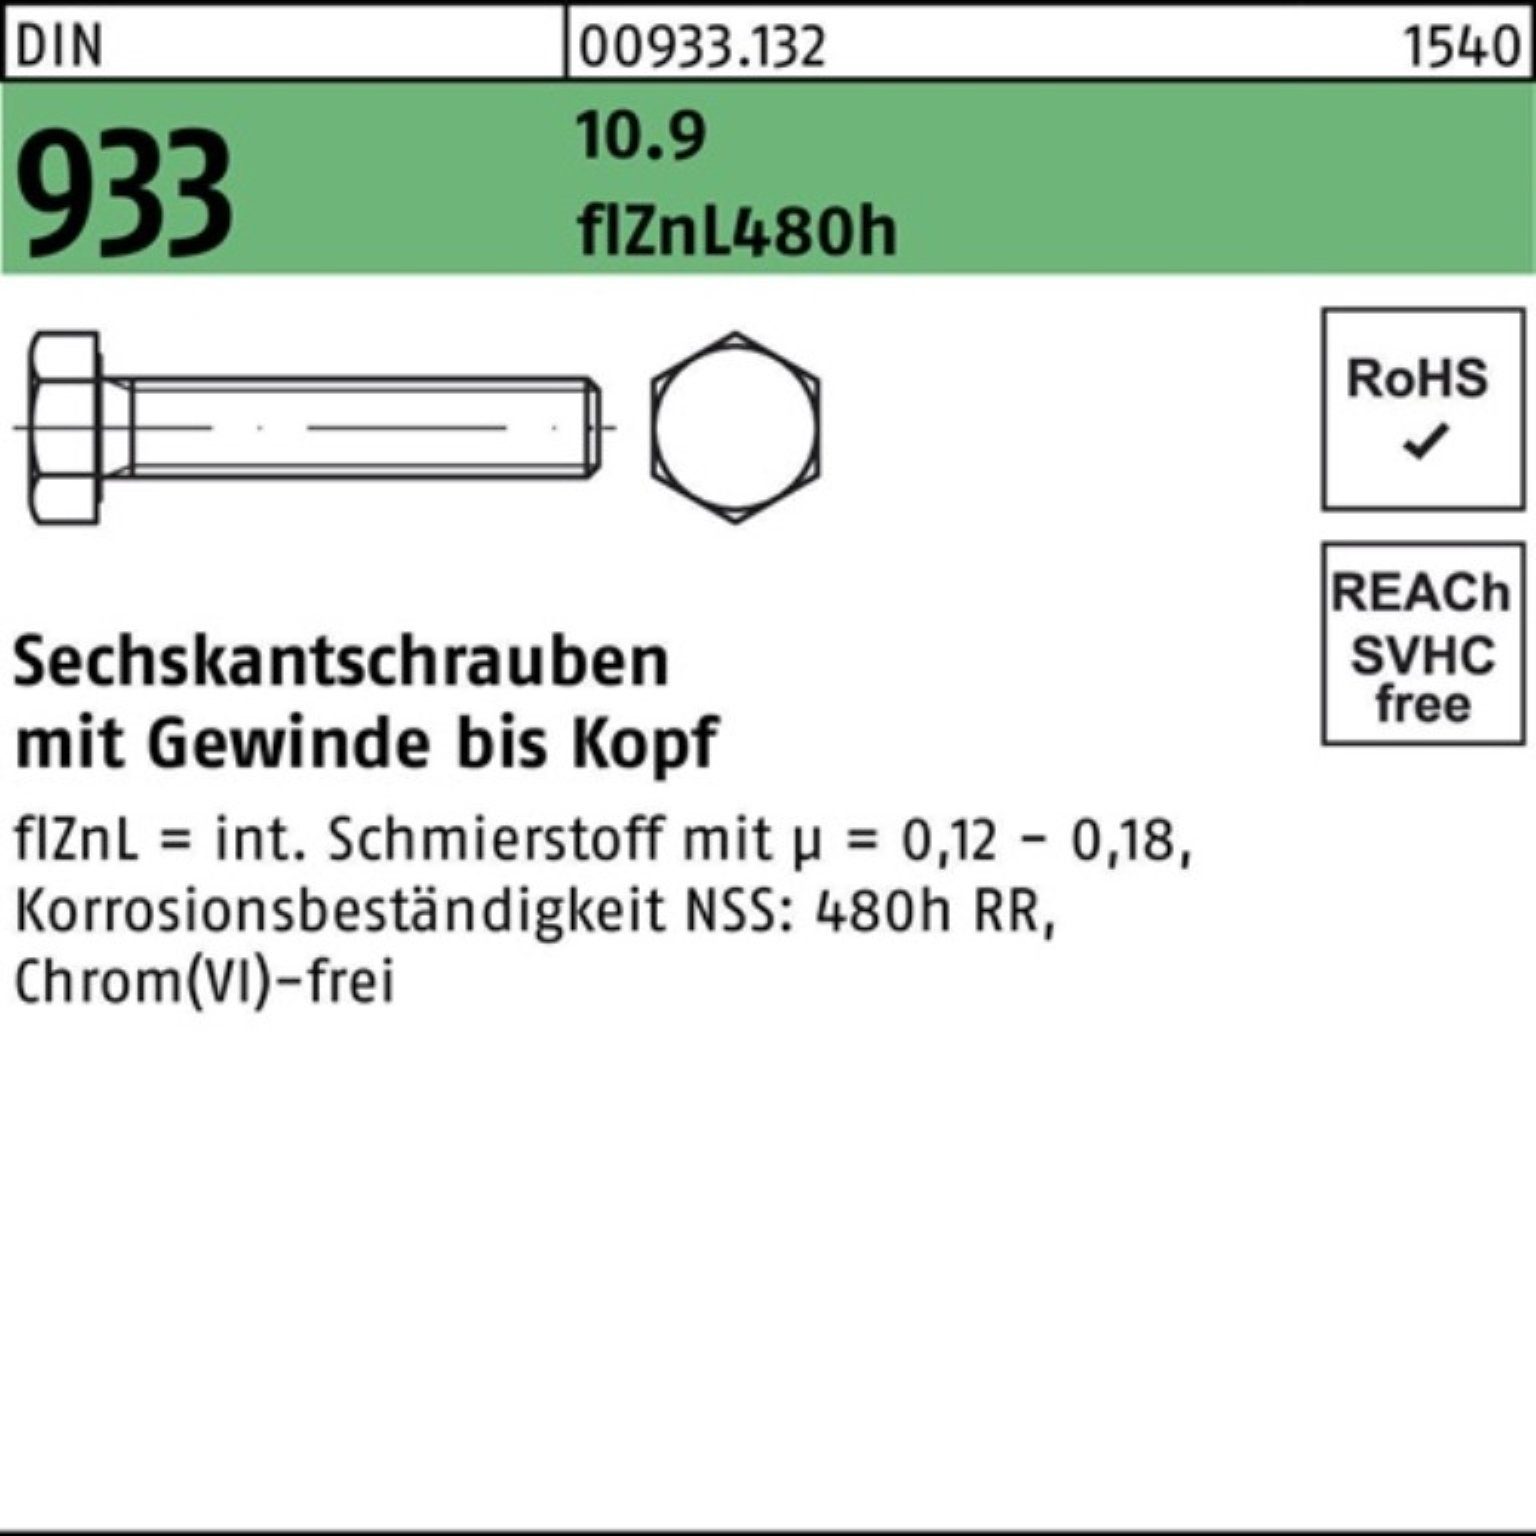 M6x 30 Reyher 500er Pack Sechskantschraube VG Sechskantschraube flZnL/nc/x/x/480h 933 10.9 DIN